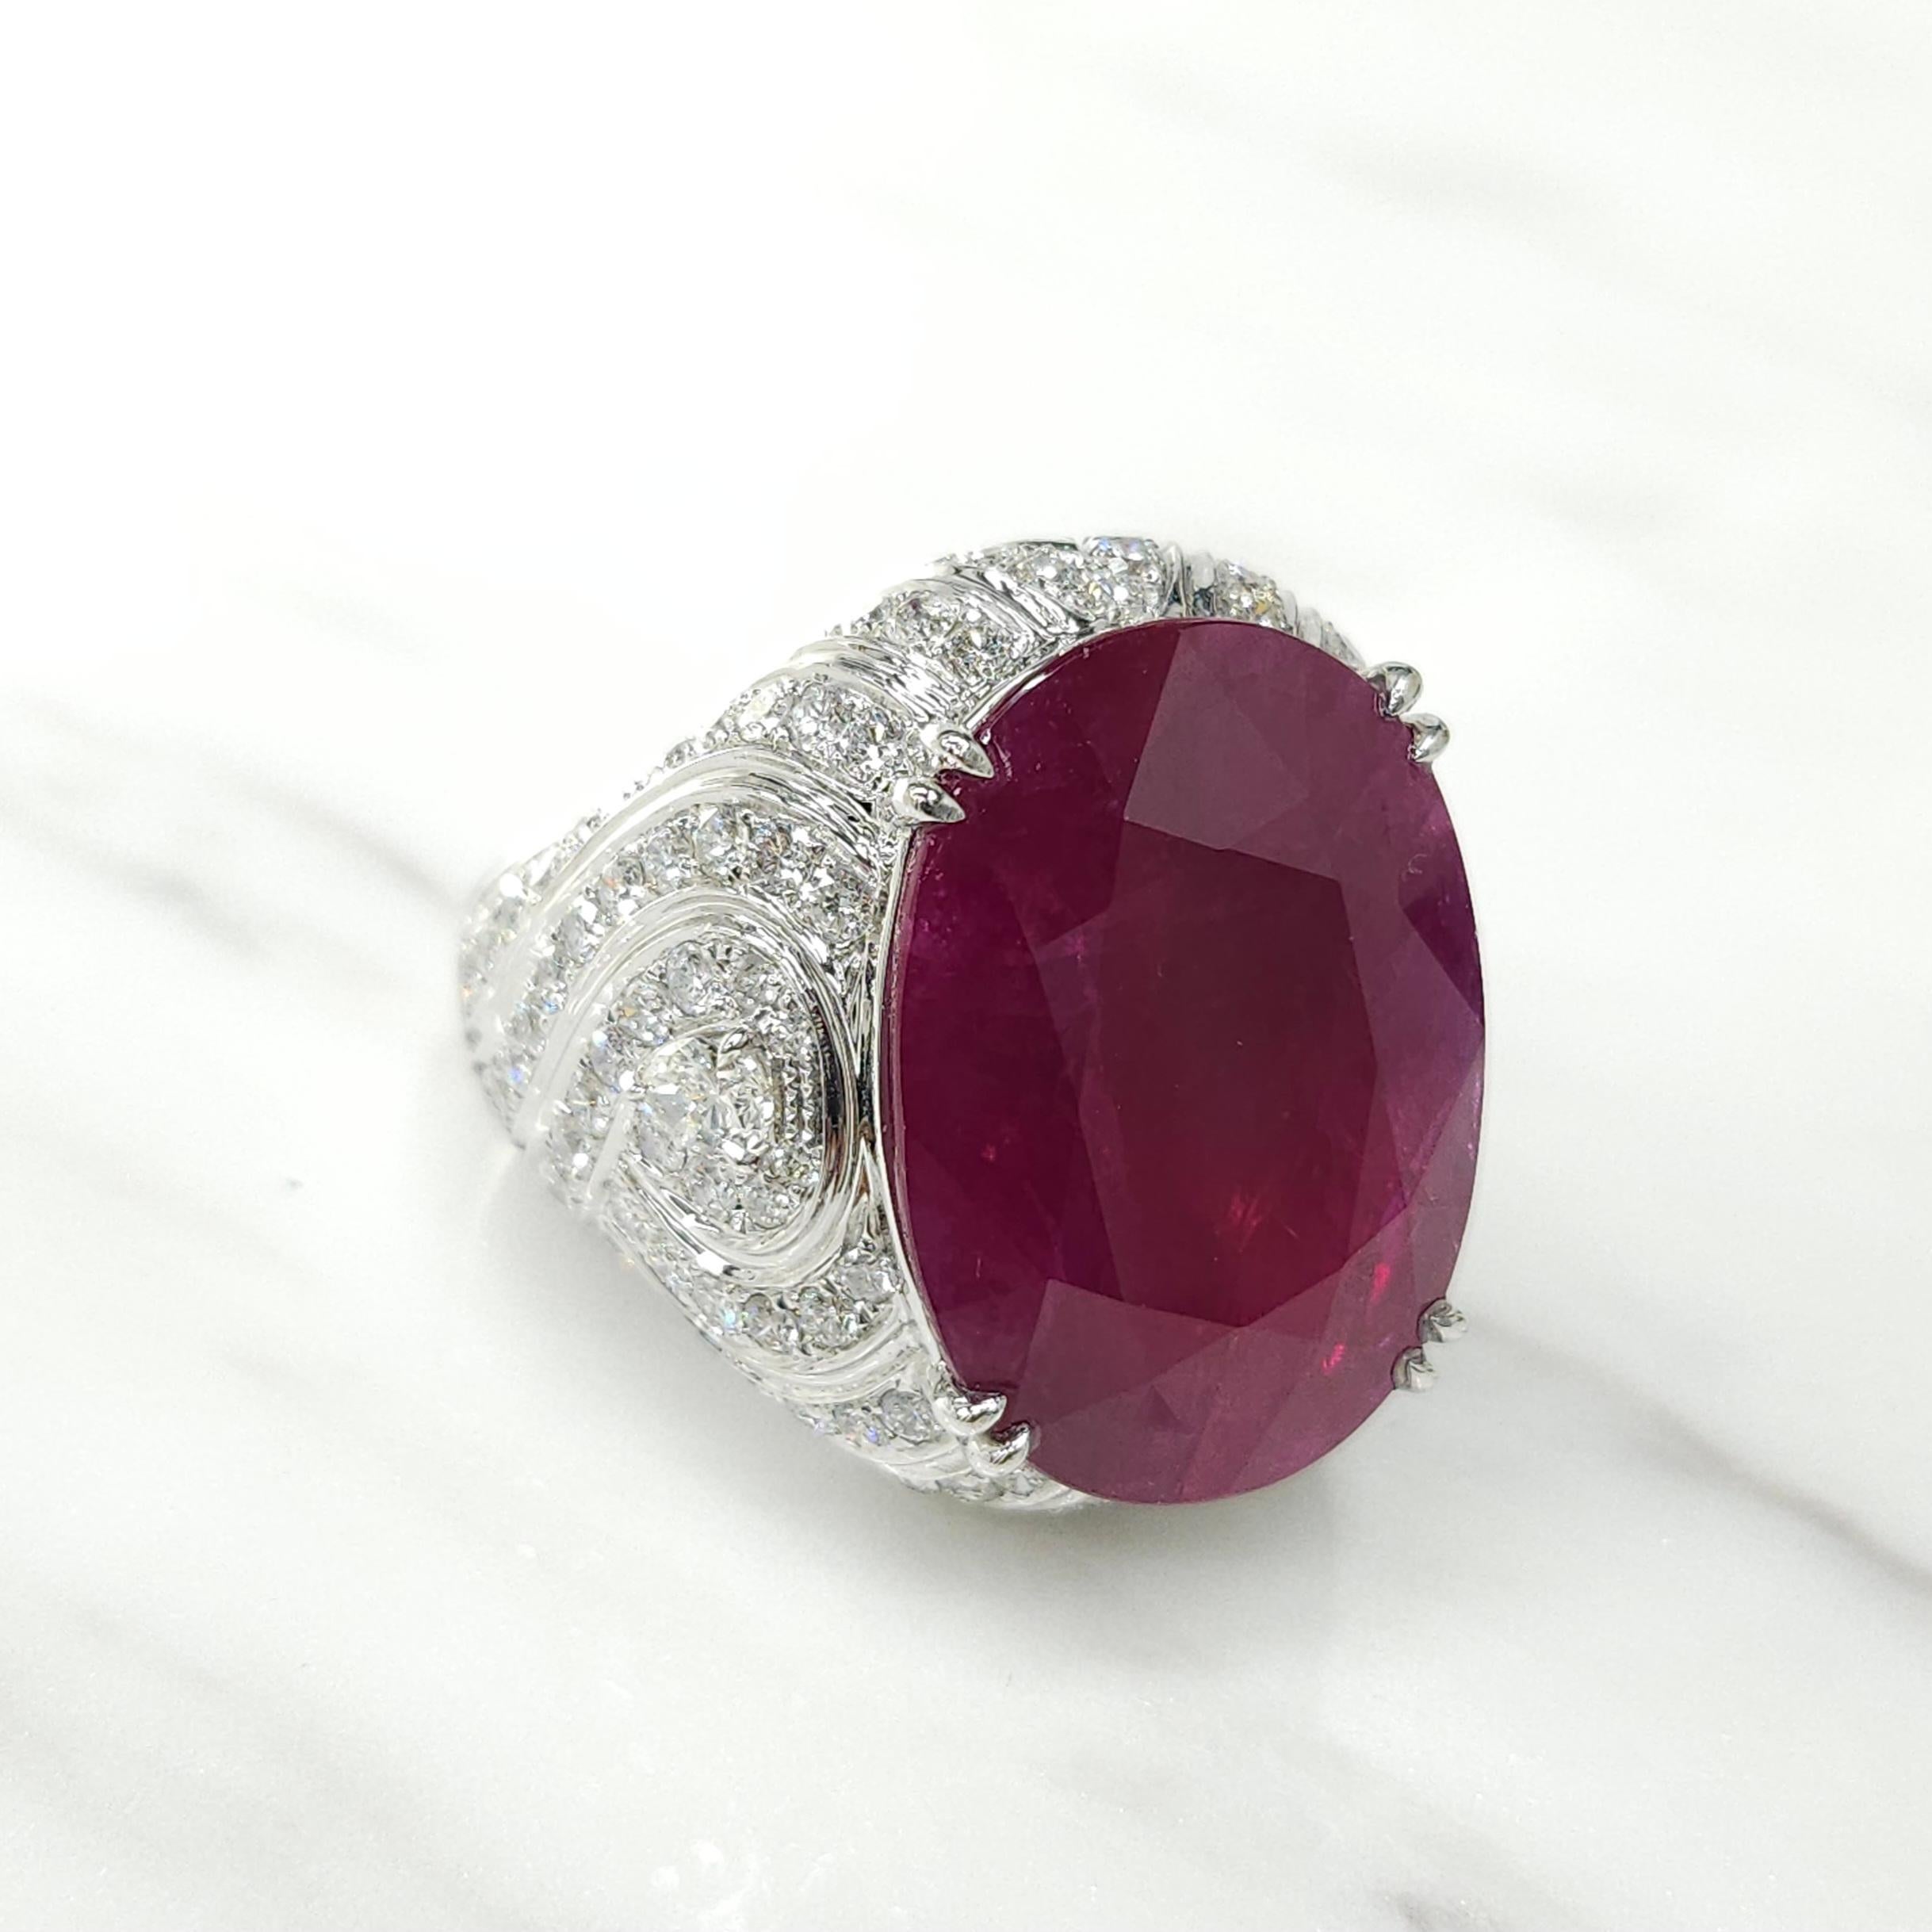 IGI Certified Rare 25.49 Carat Burma Ruby & Diamond Ring in 18K White Gold For Sale 5